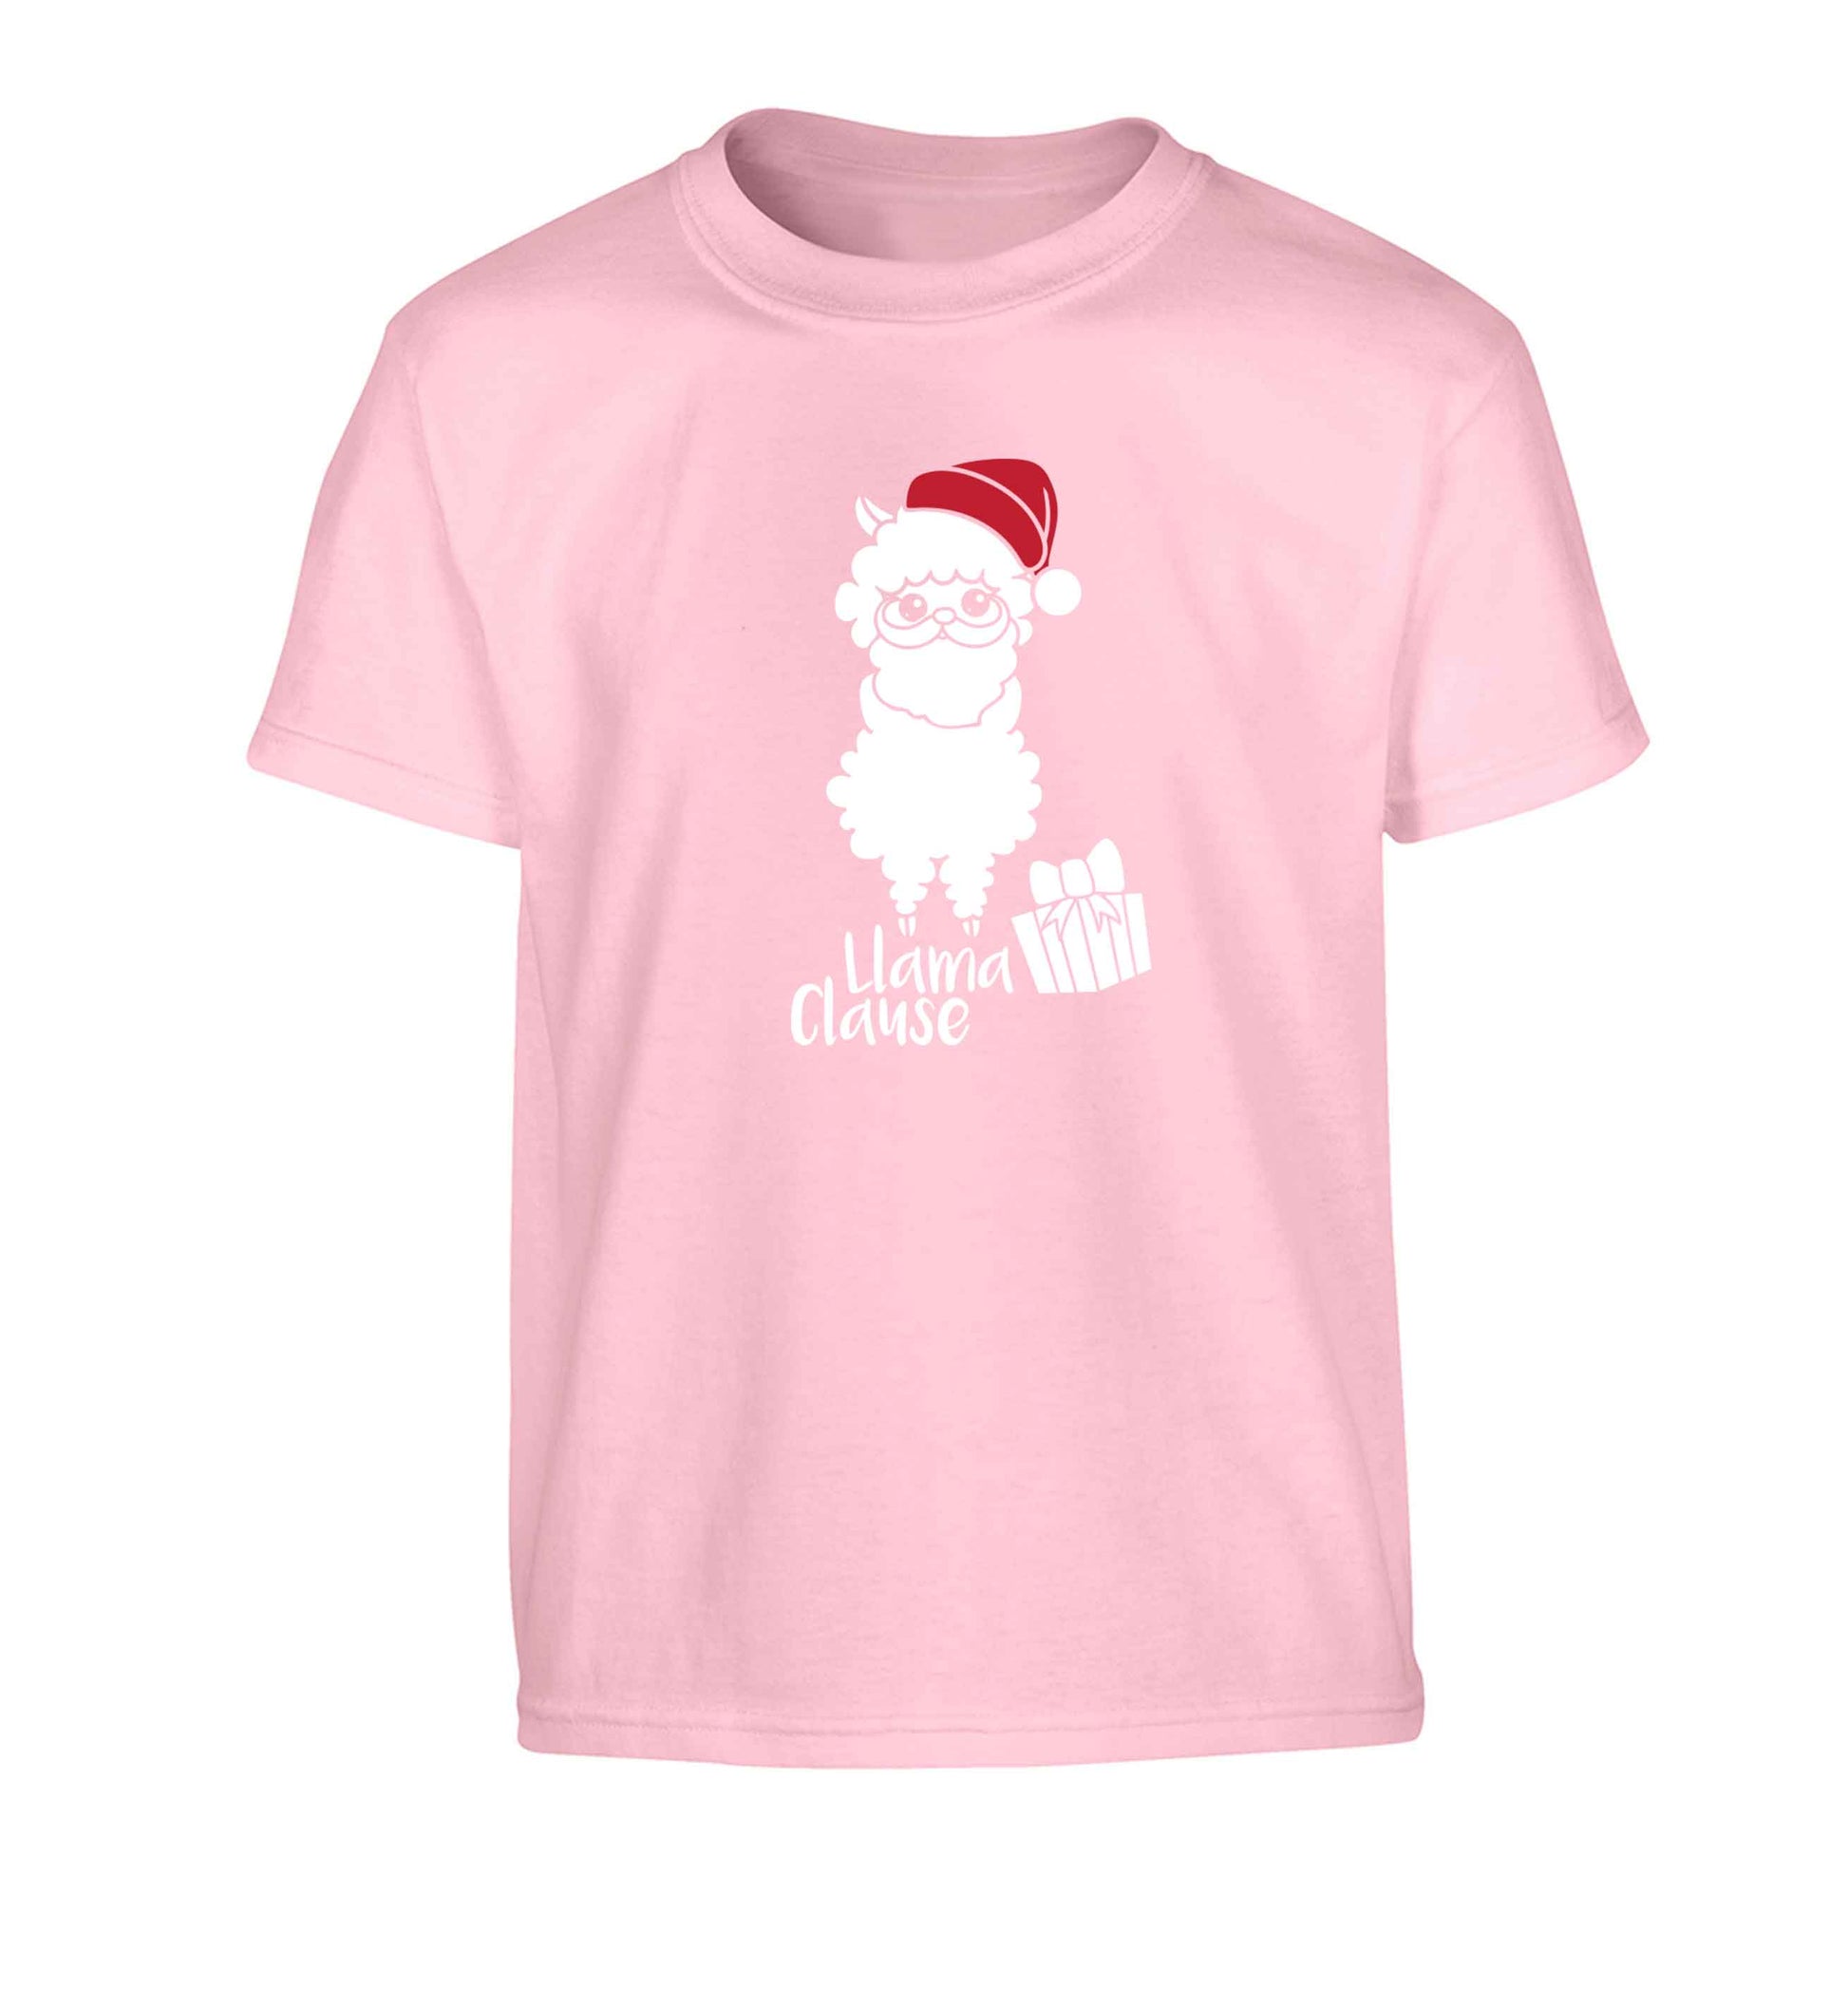 Llama Clause Children's light pink Tshirt 12-13 Years